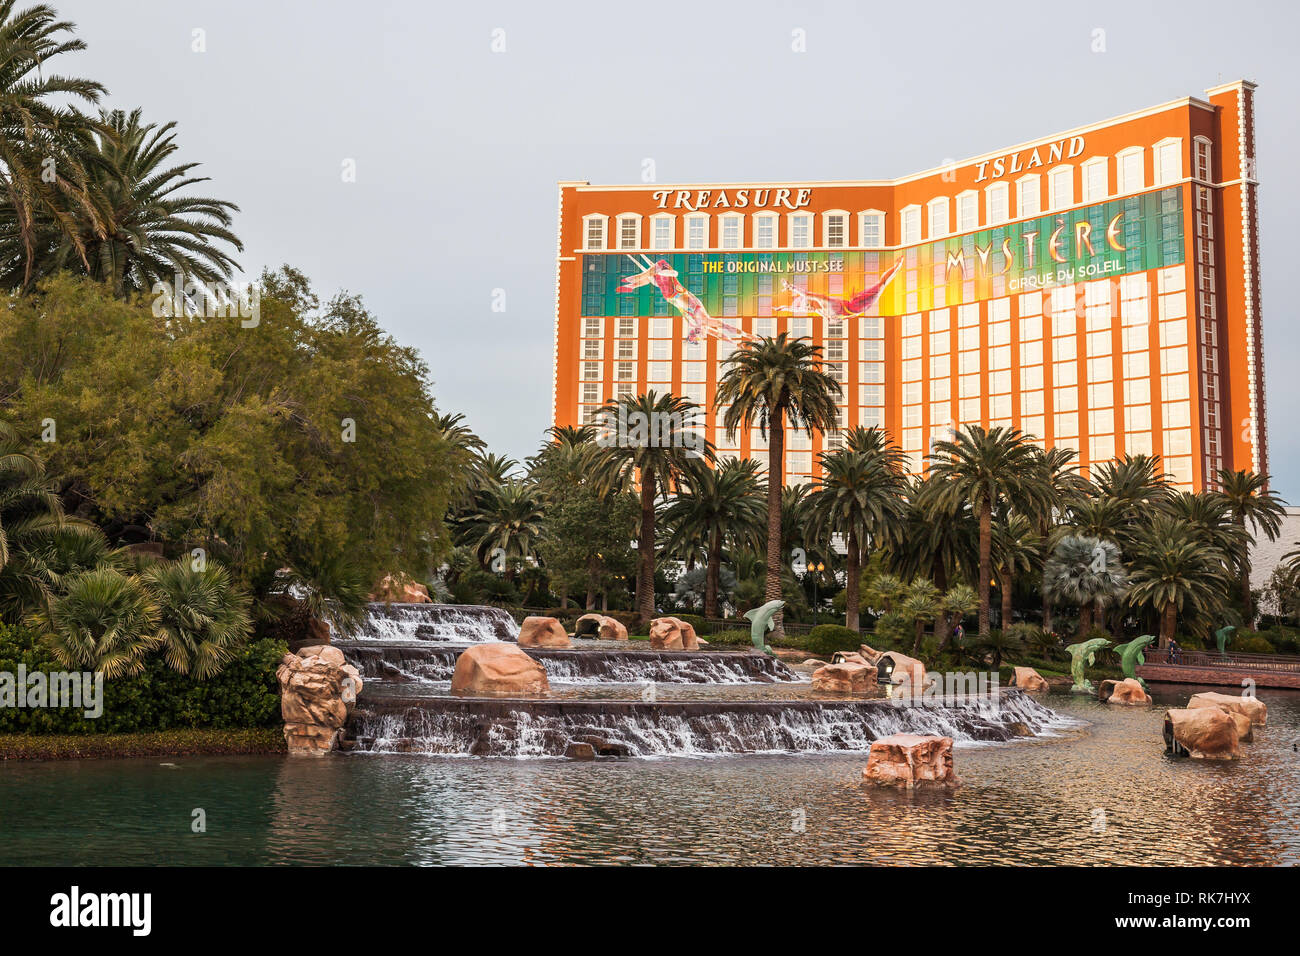 Exterior view of Treasure Island Hotel & Casino in 2018, Treasure Island is a hotel and casino located on the Las Vegas Strip in Paradise, Nevada, USA Stock Photo